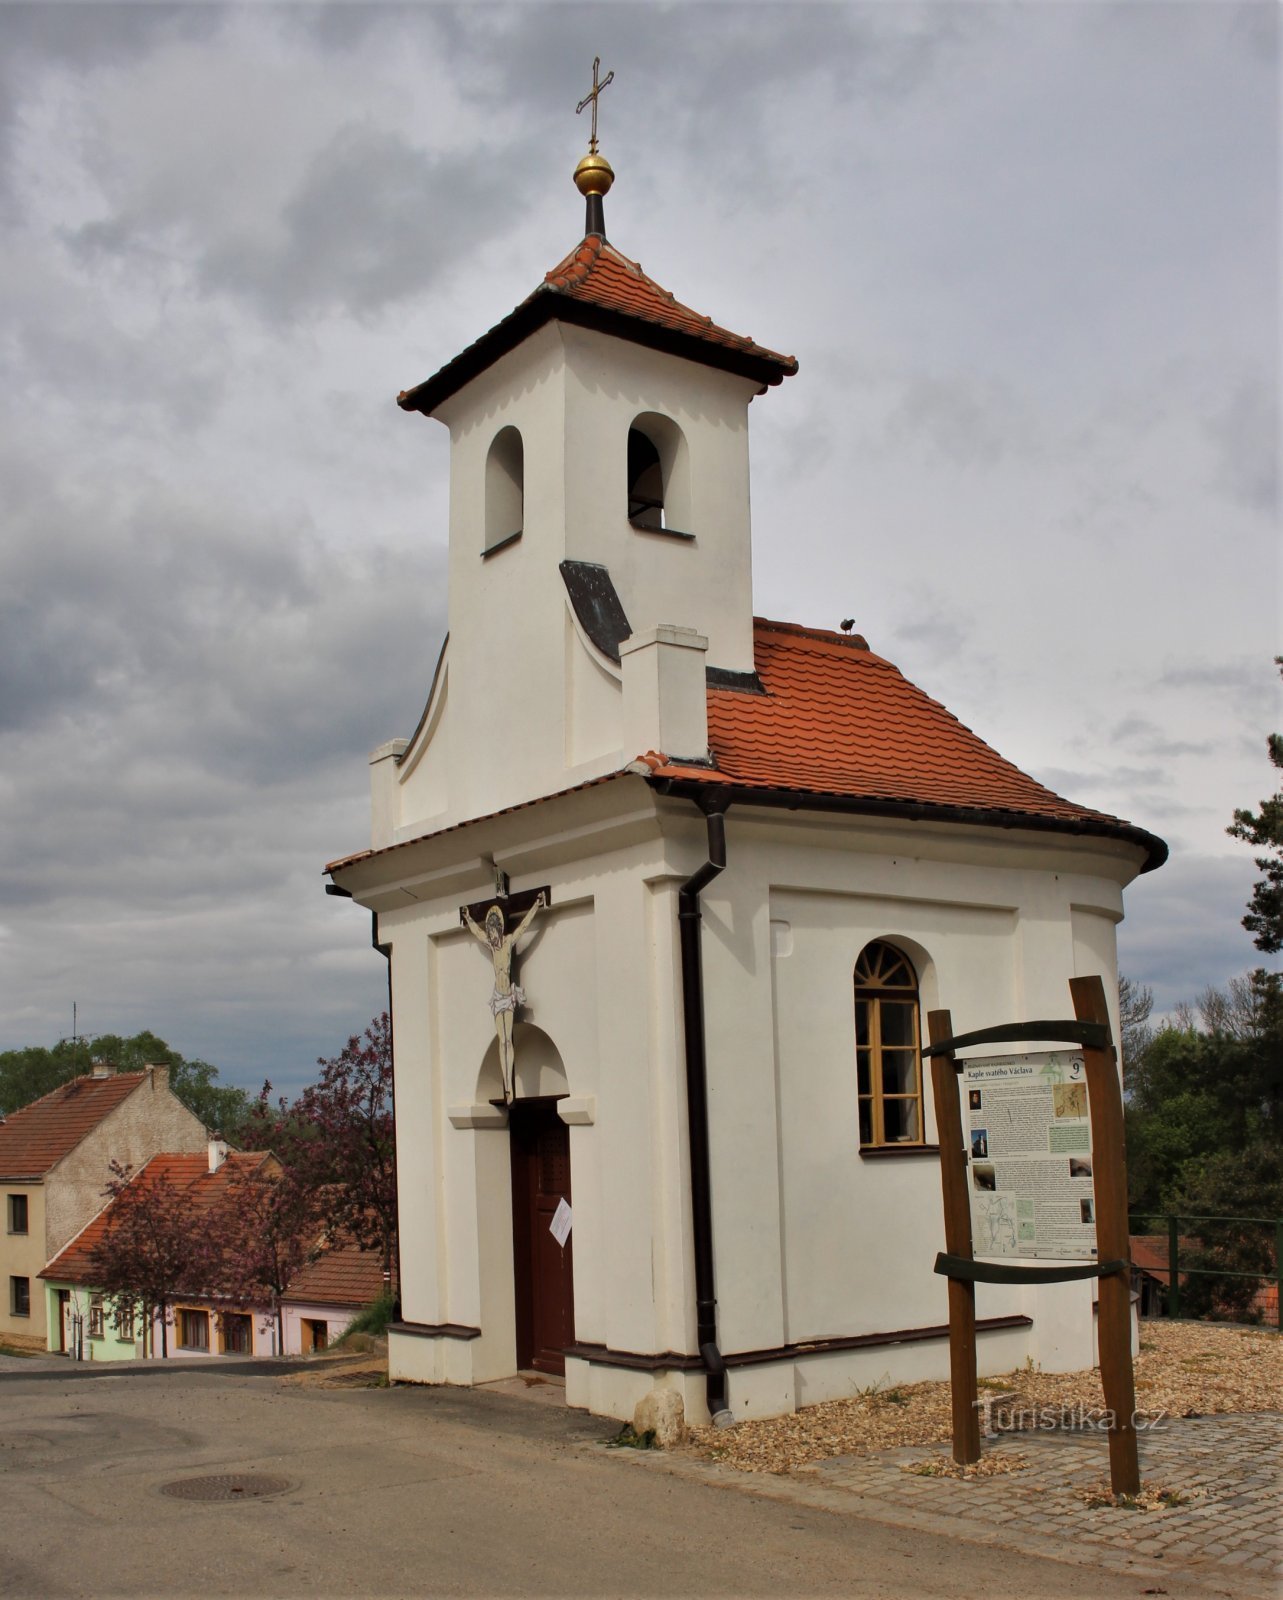 Chapel of St. Wenceslas